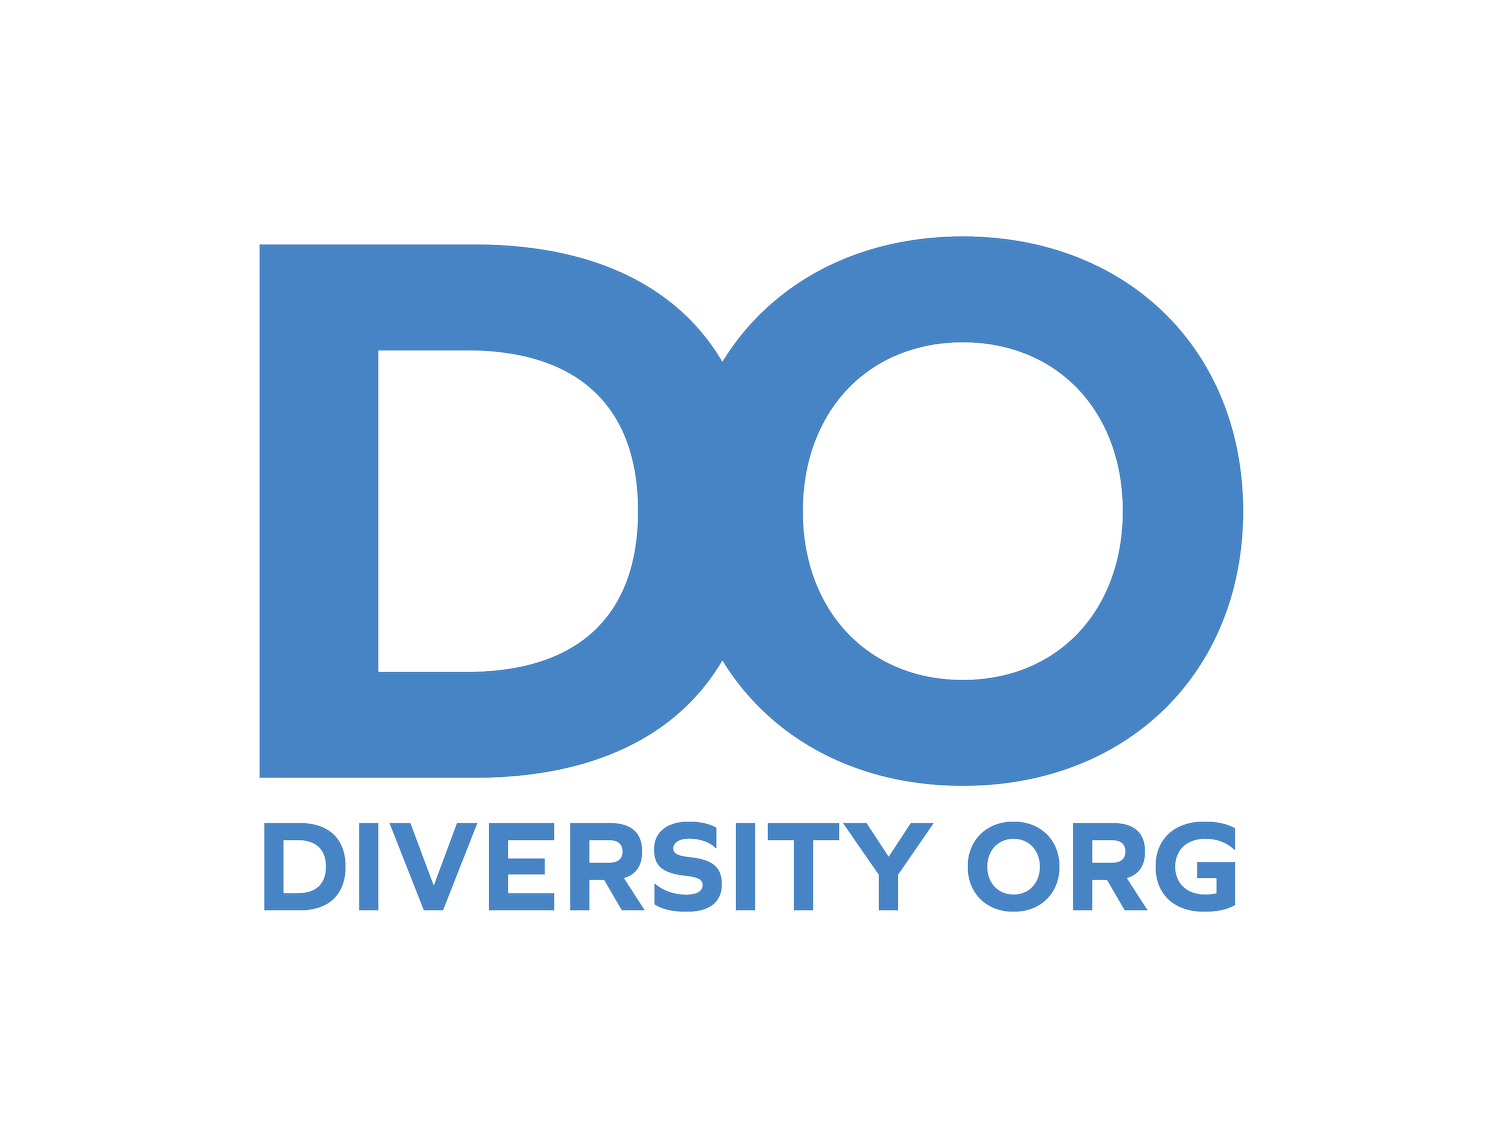 The Diversity Org